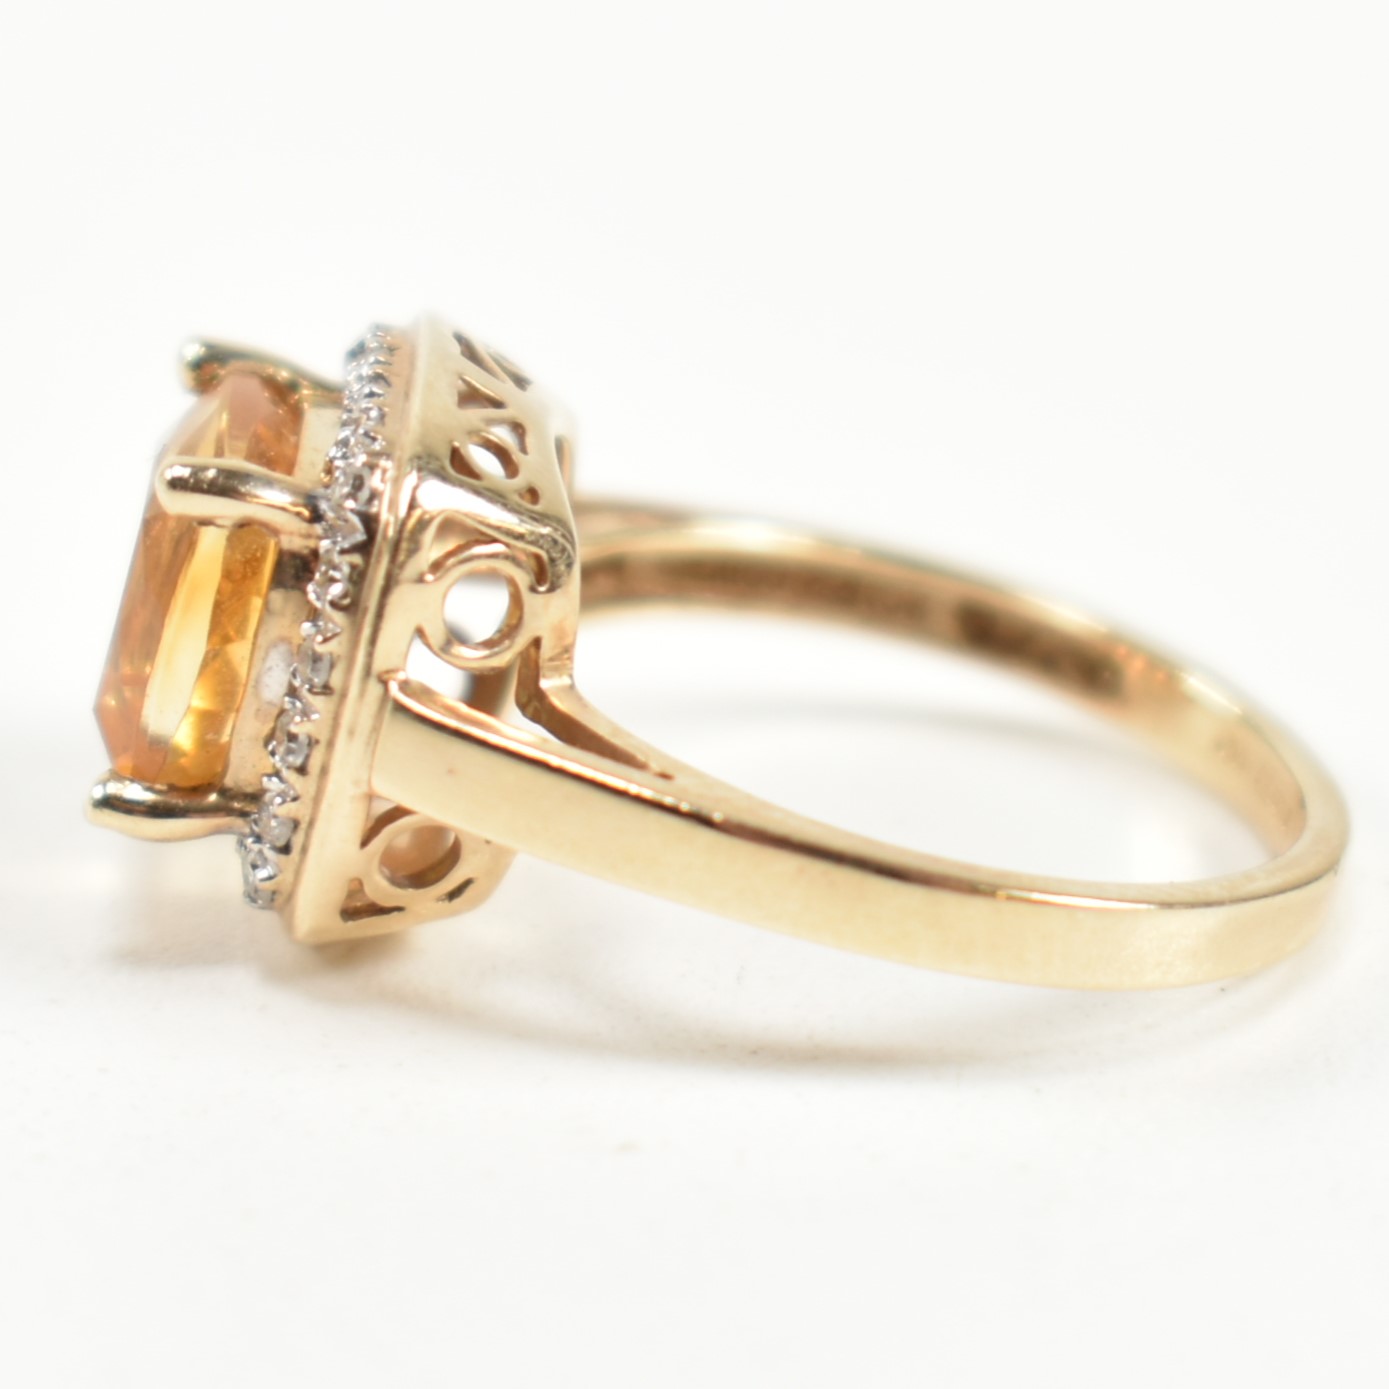 HALLMARKED 9CT GOLD CITRINE & DIAMOND RING - Image 7 of 9